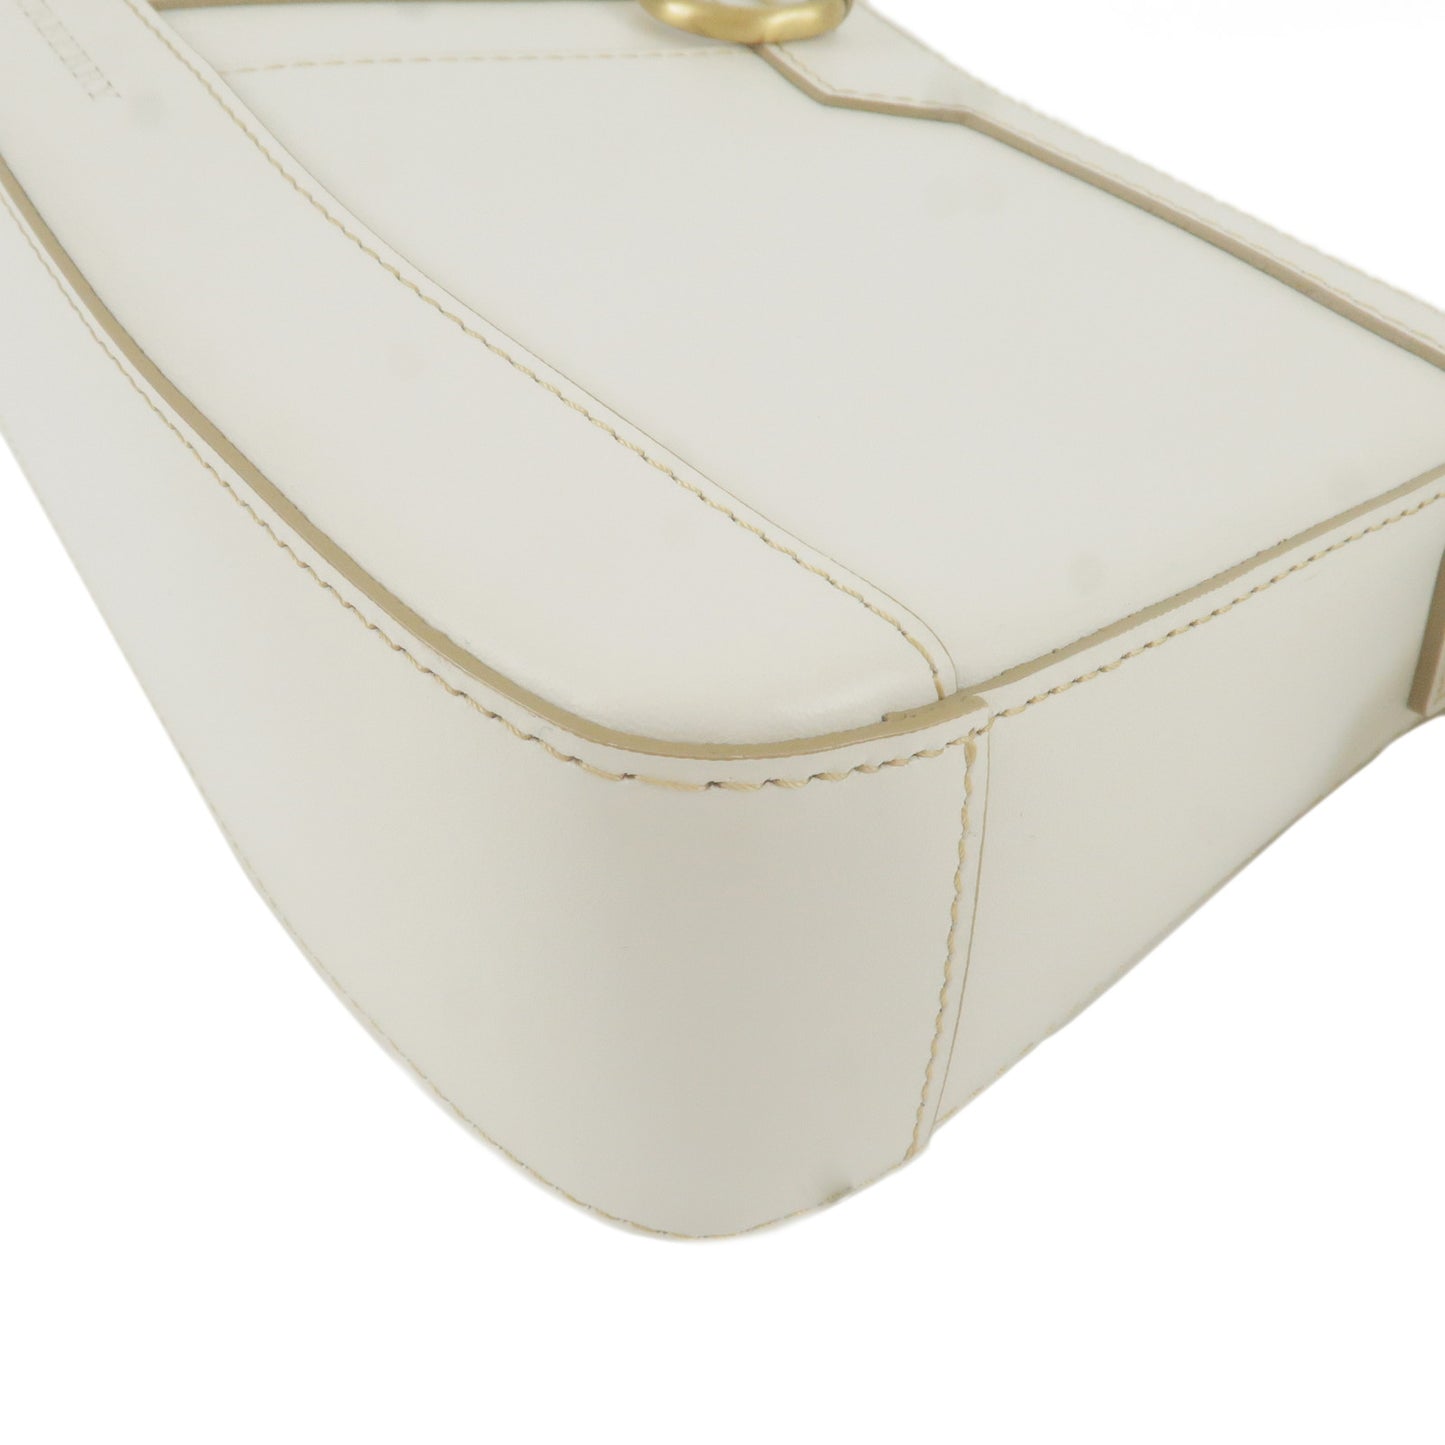 BURBERRY Leather Shoulder Bag Hand Bag Purse White